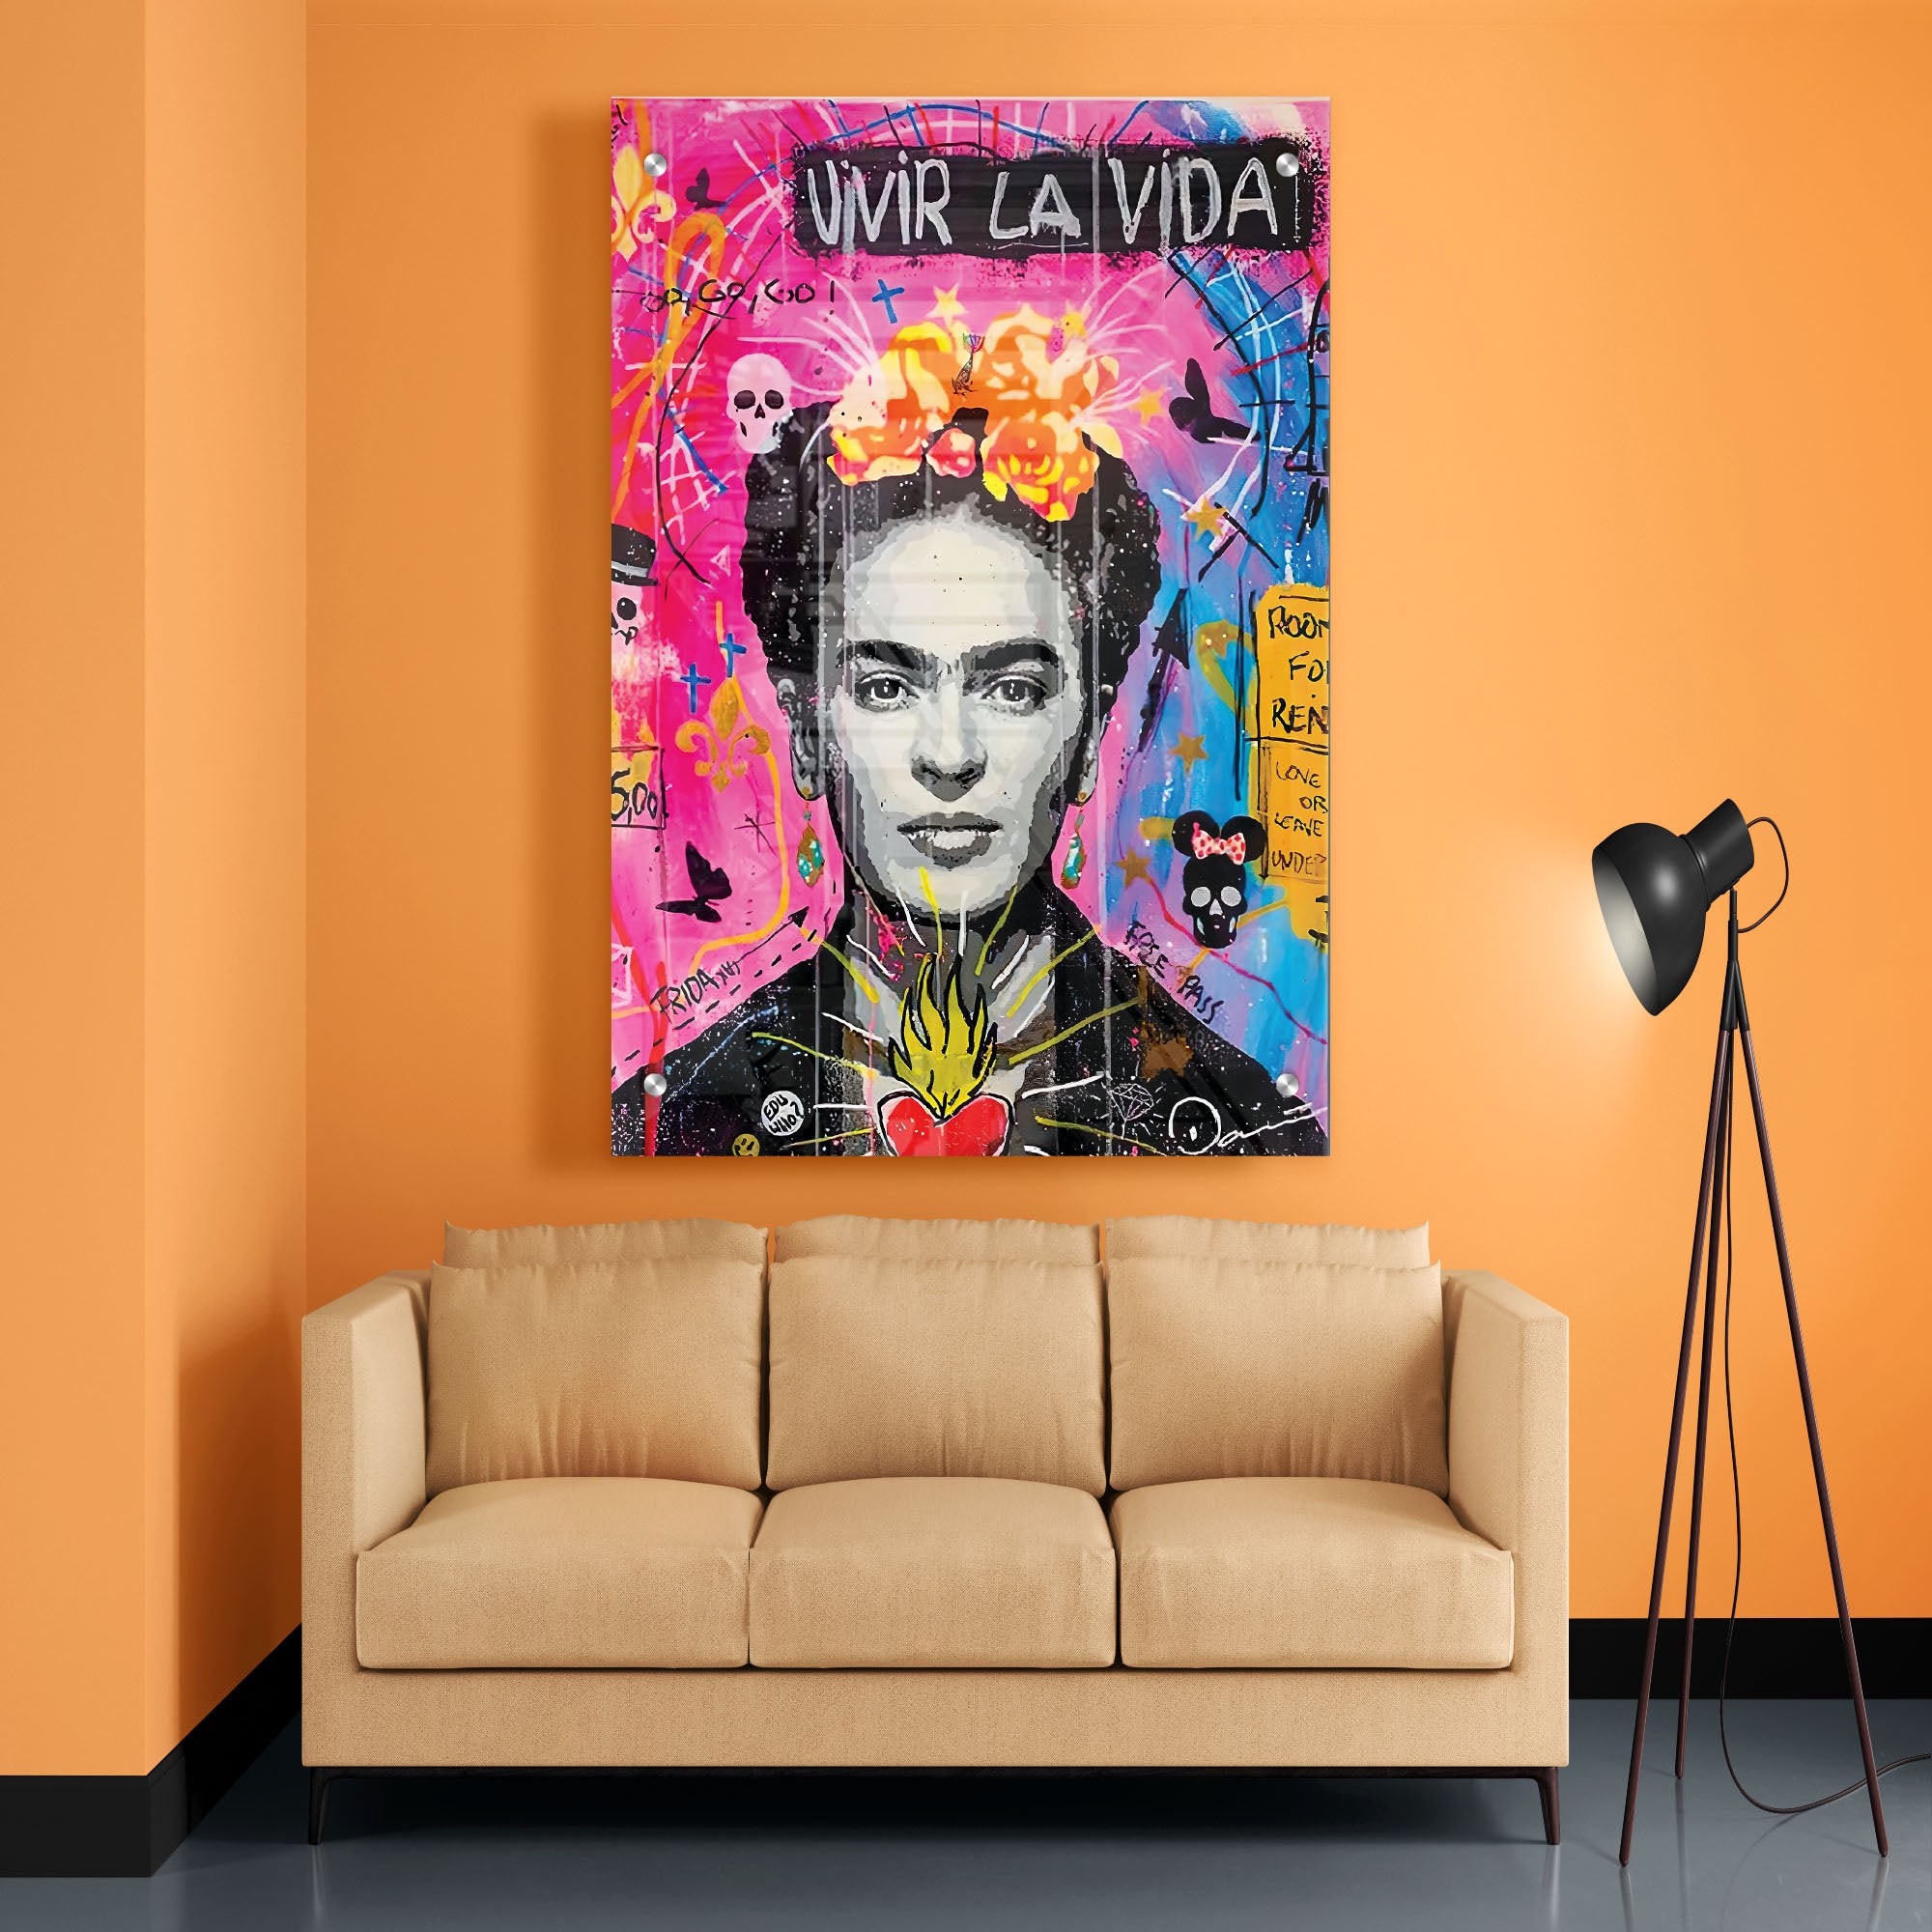 Vivir La Vida Frida Kahlo Acrylic Wall Painting